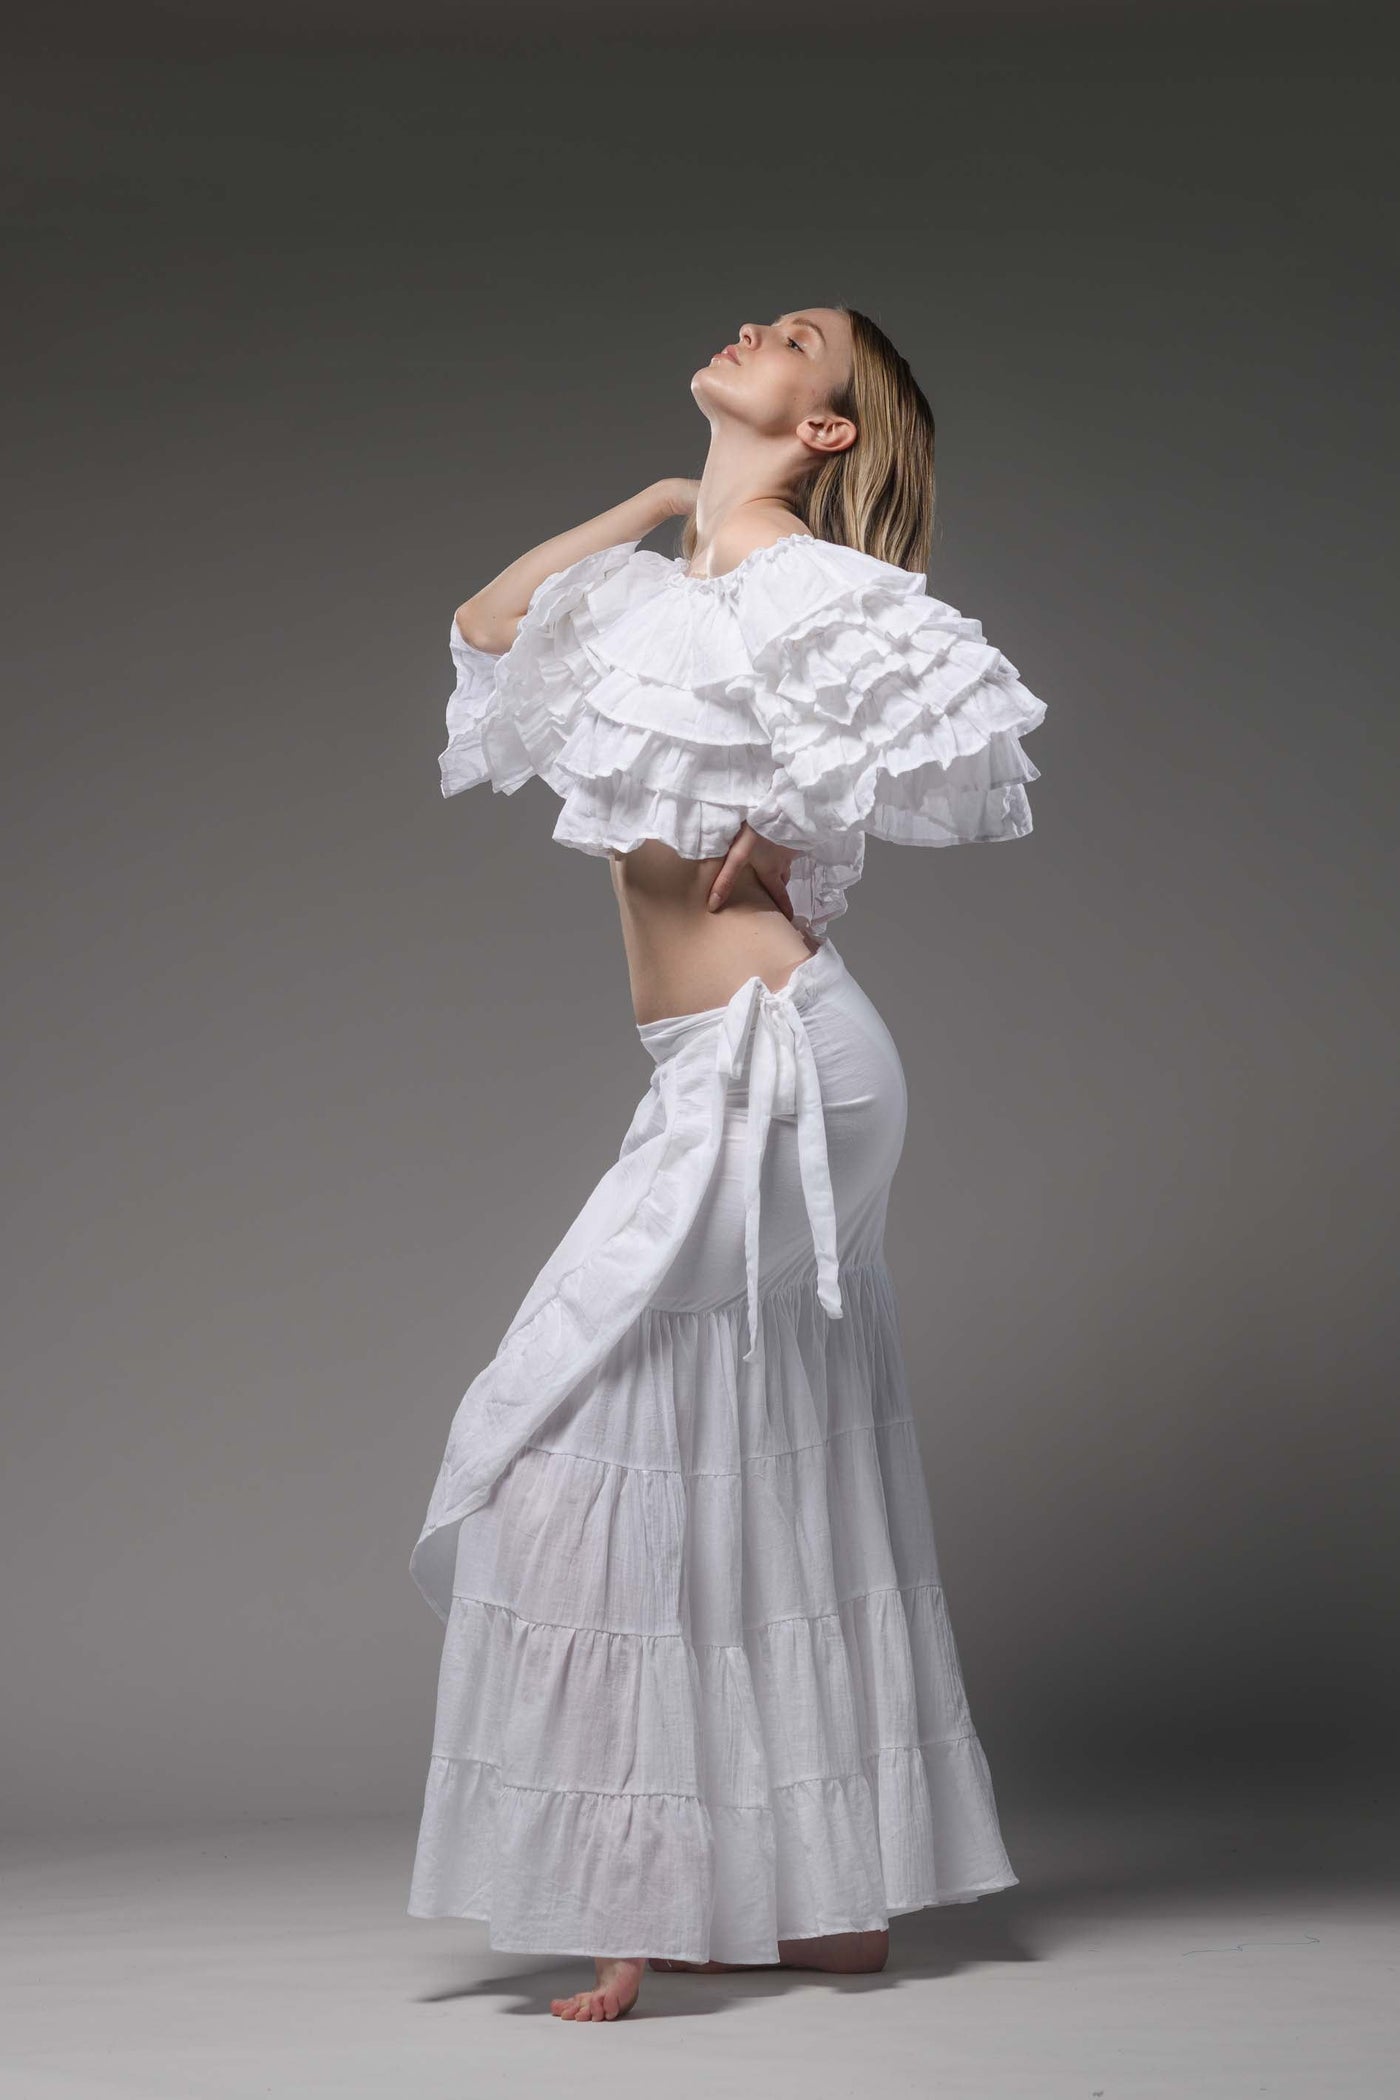 Bohemian gypsy fashion multilayer ruffled white top crop